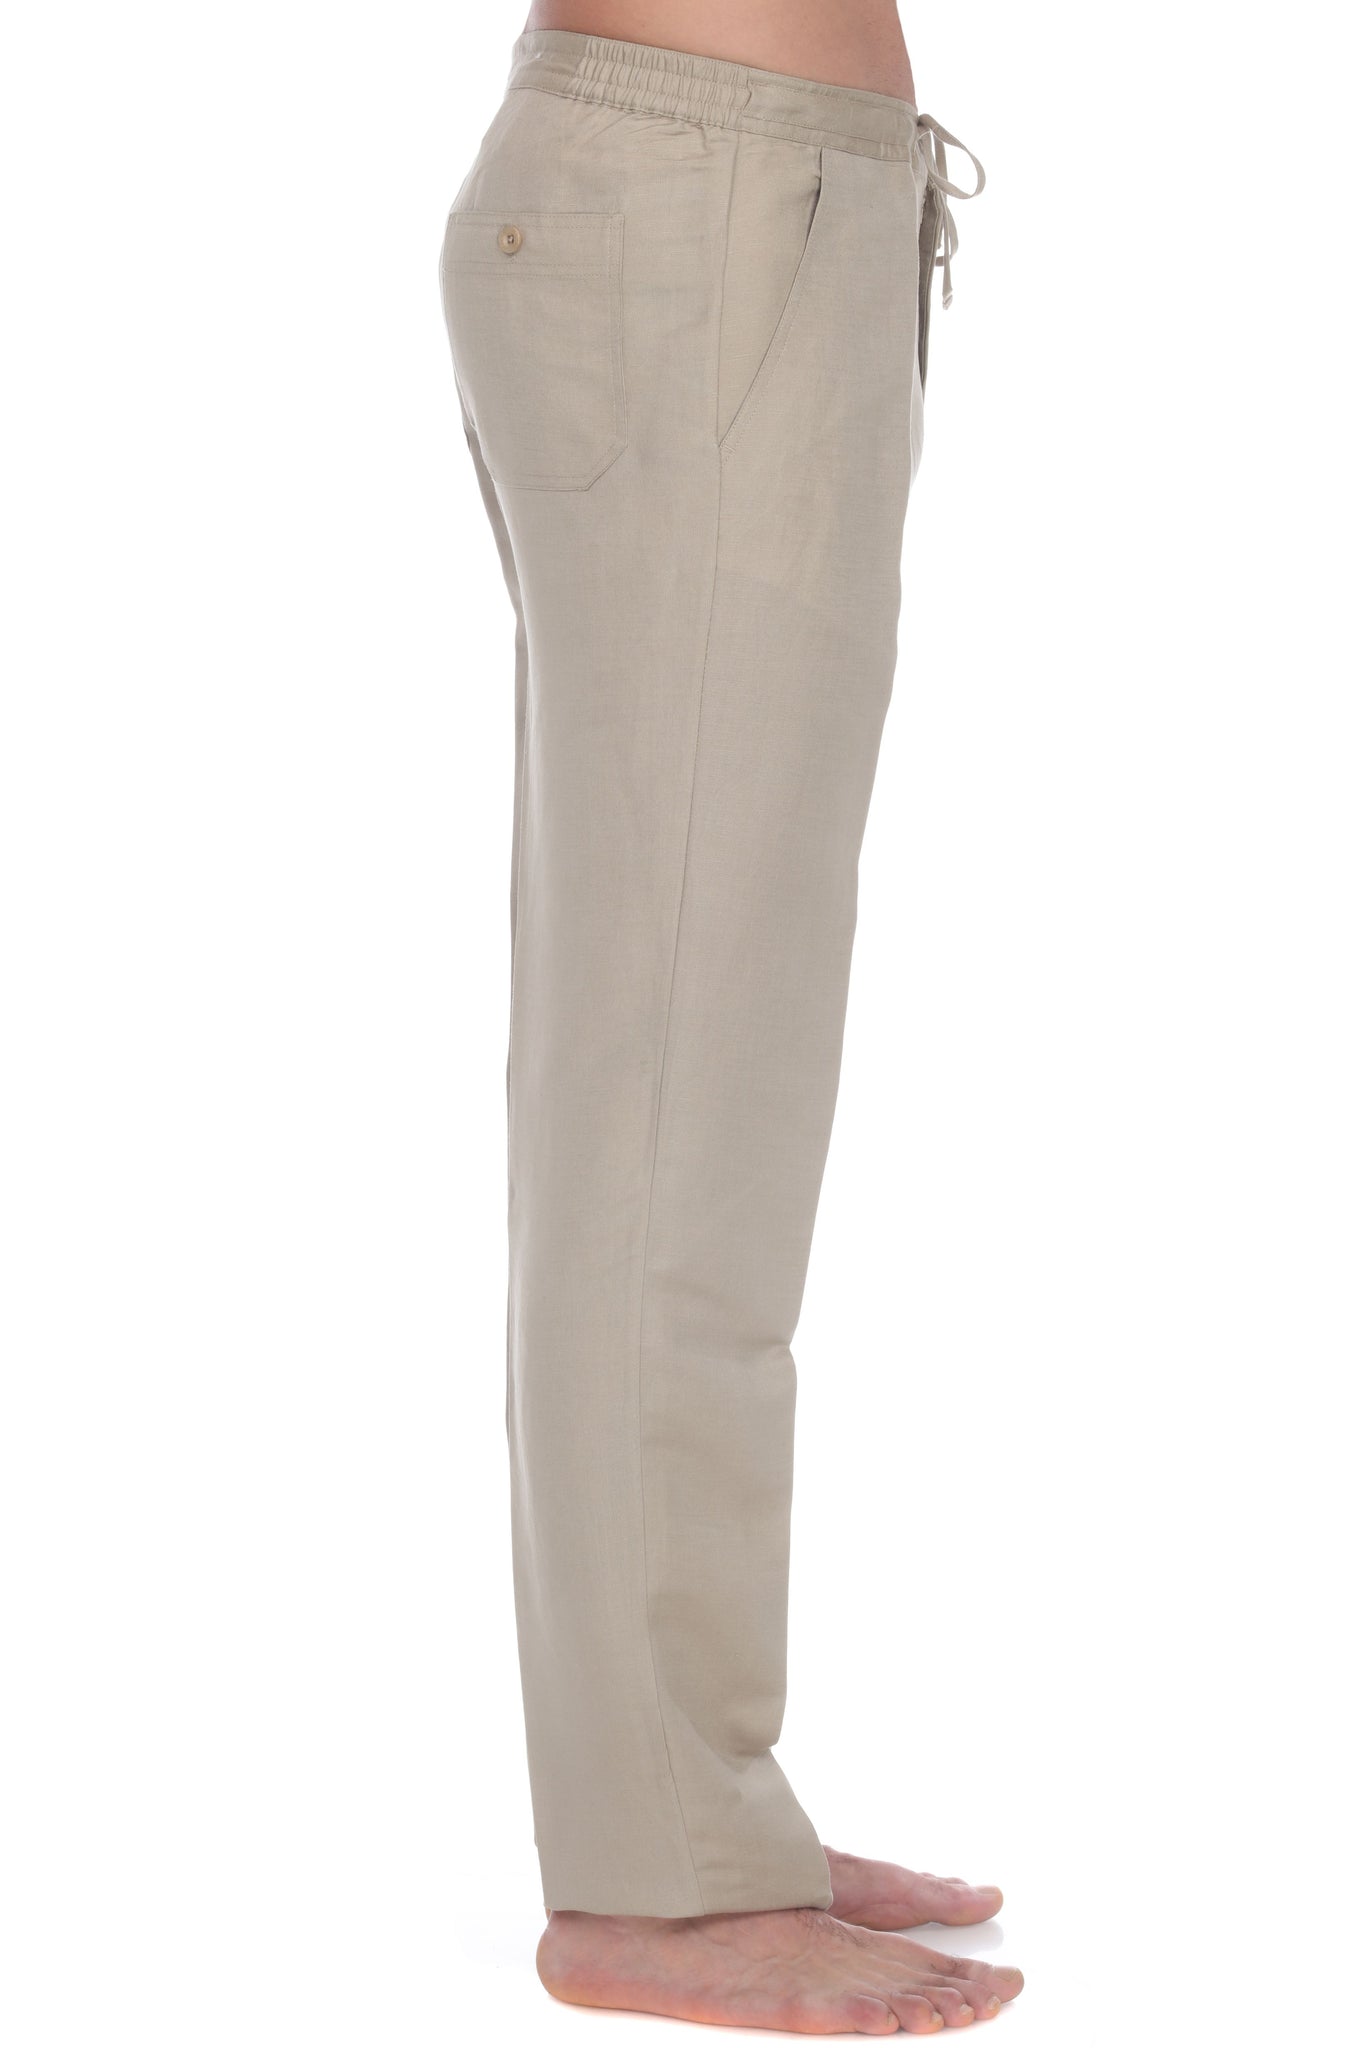 Mojito Collection Men's Casual Drawstring Linen Pants